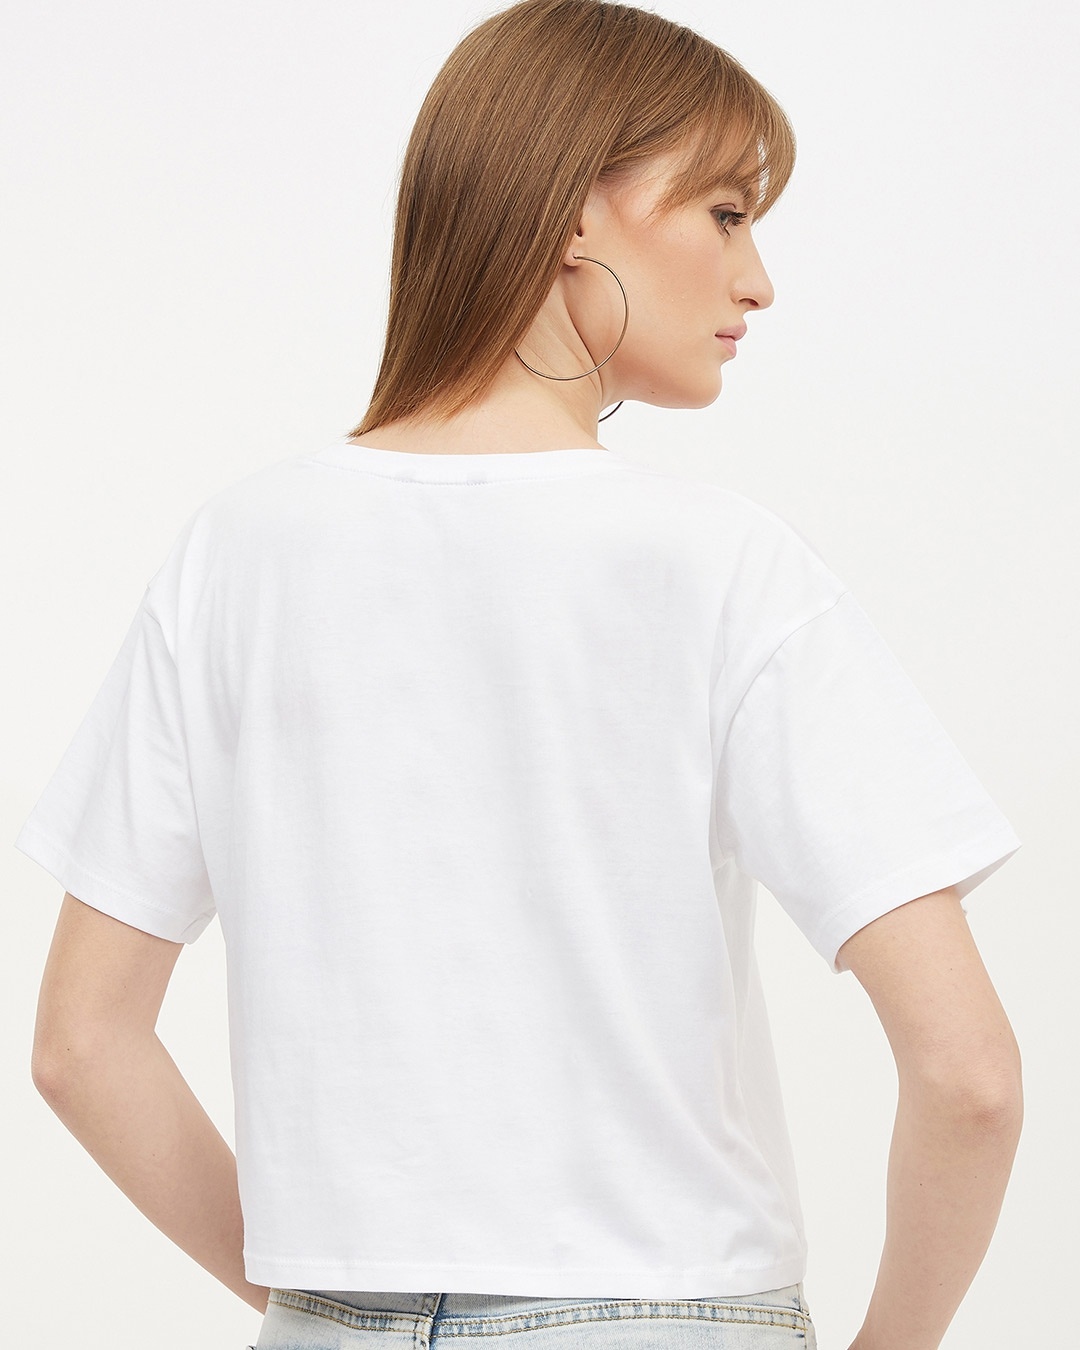 Shop Women's Round Neck Short Sleeves Striped T-shirt